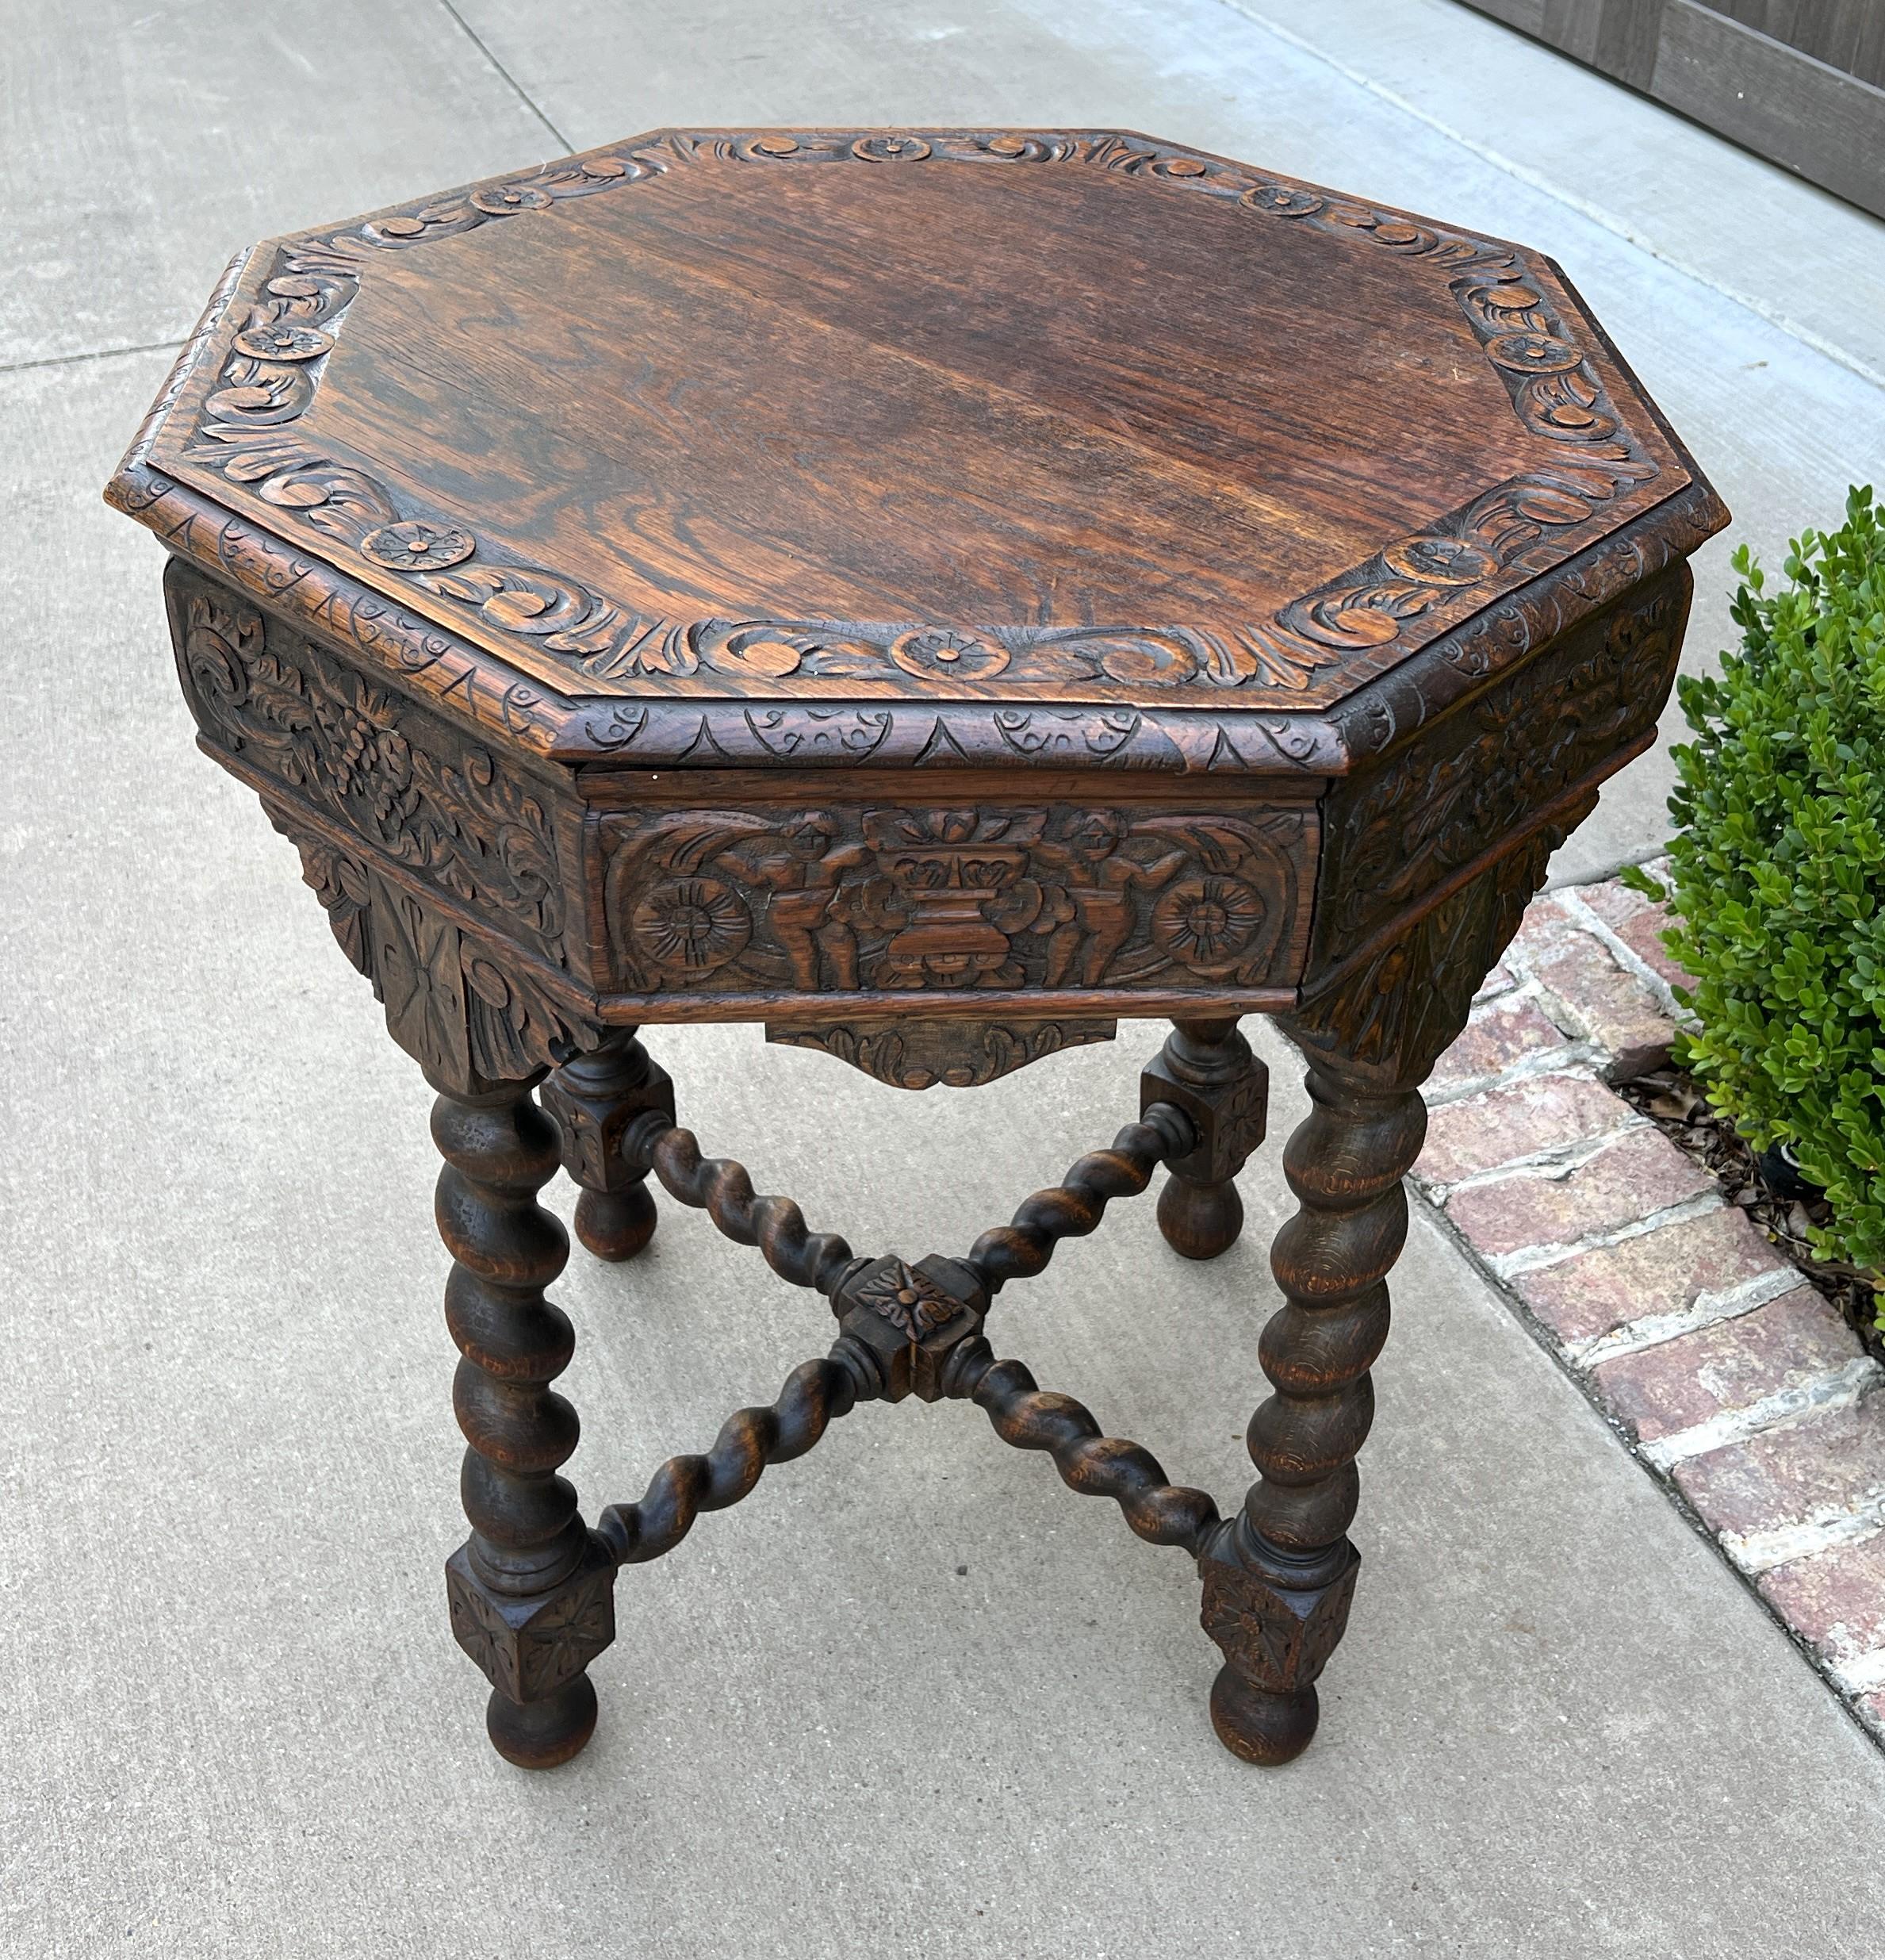 Antique French Table Barley Twist Octagonal Renaissance Revival Carved Oak 19thc For Sale 11